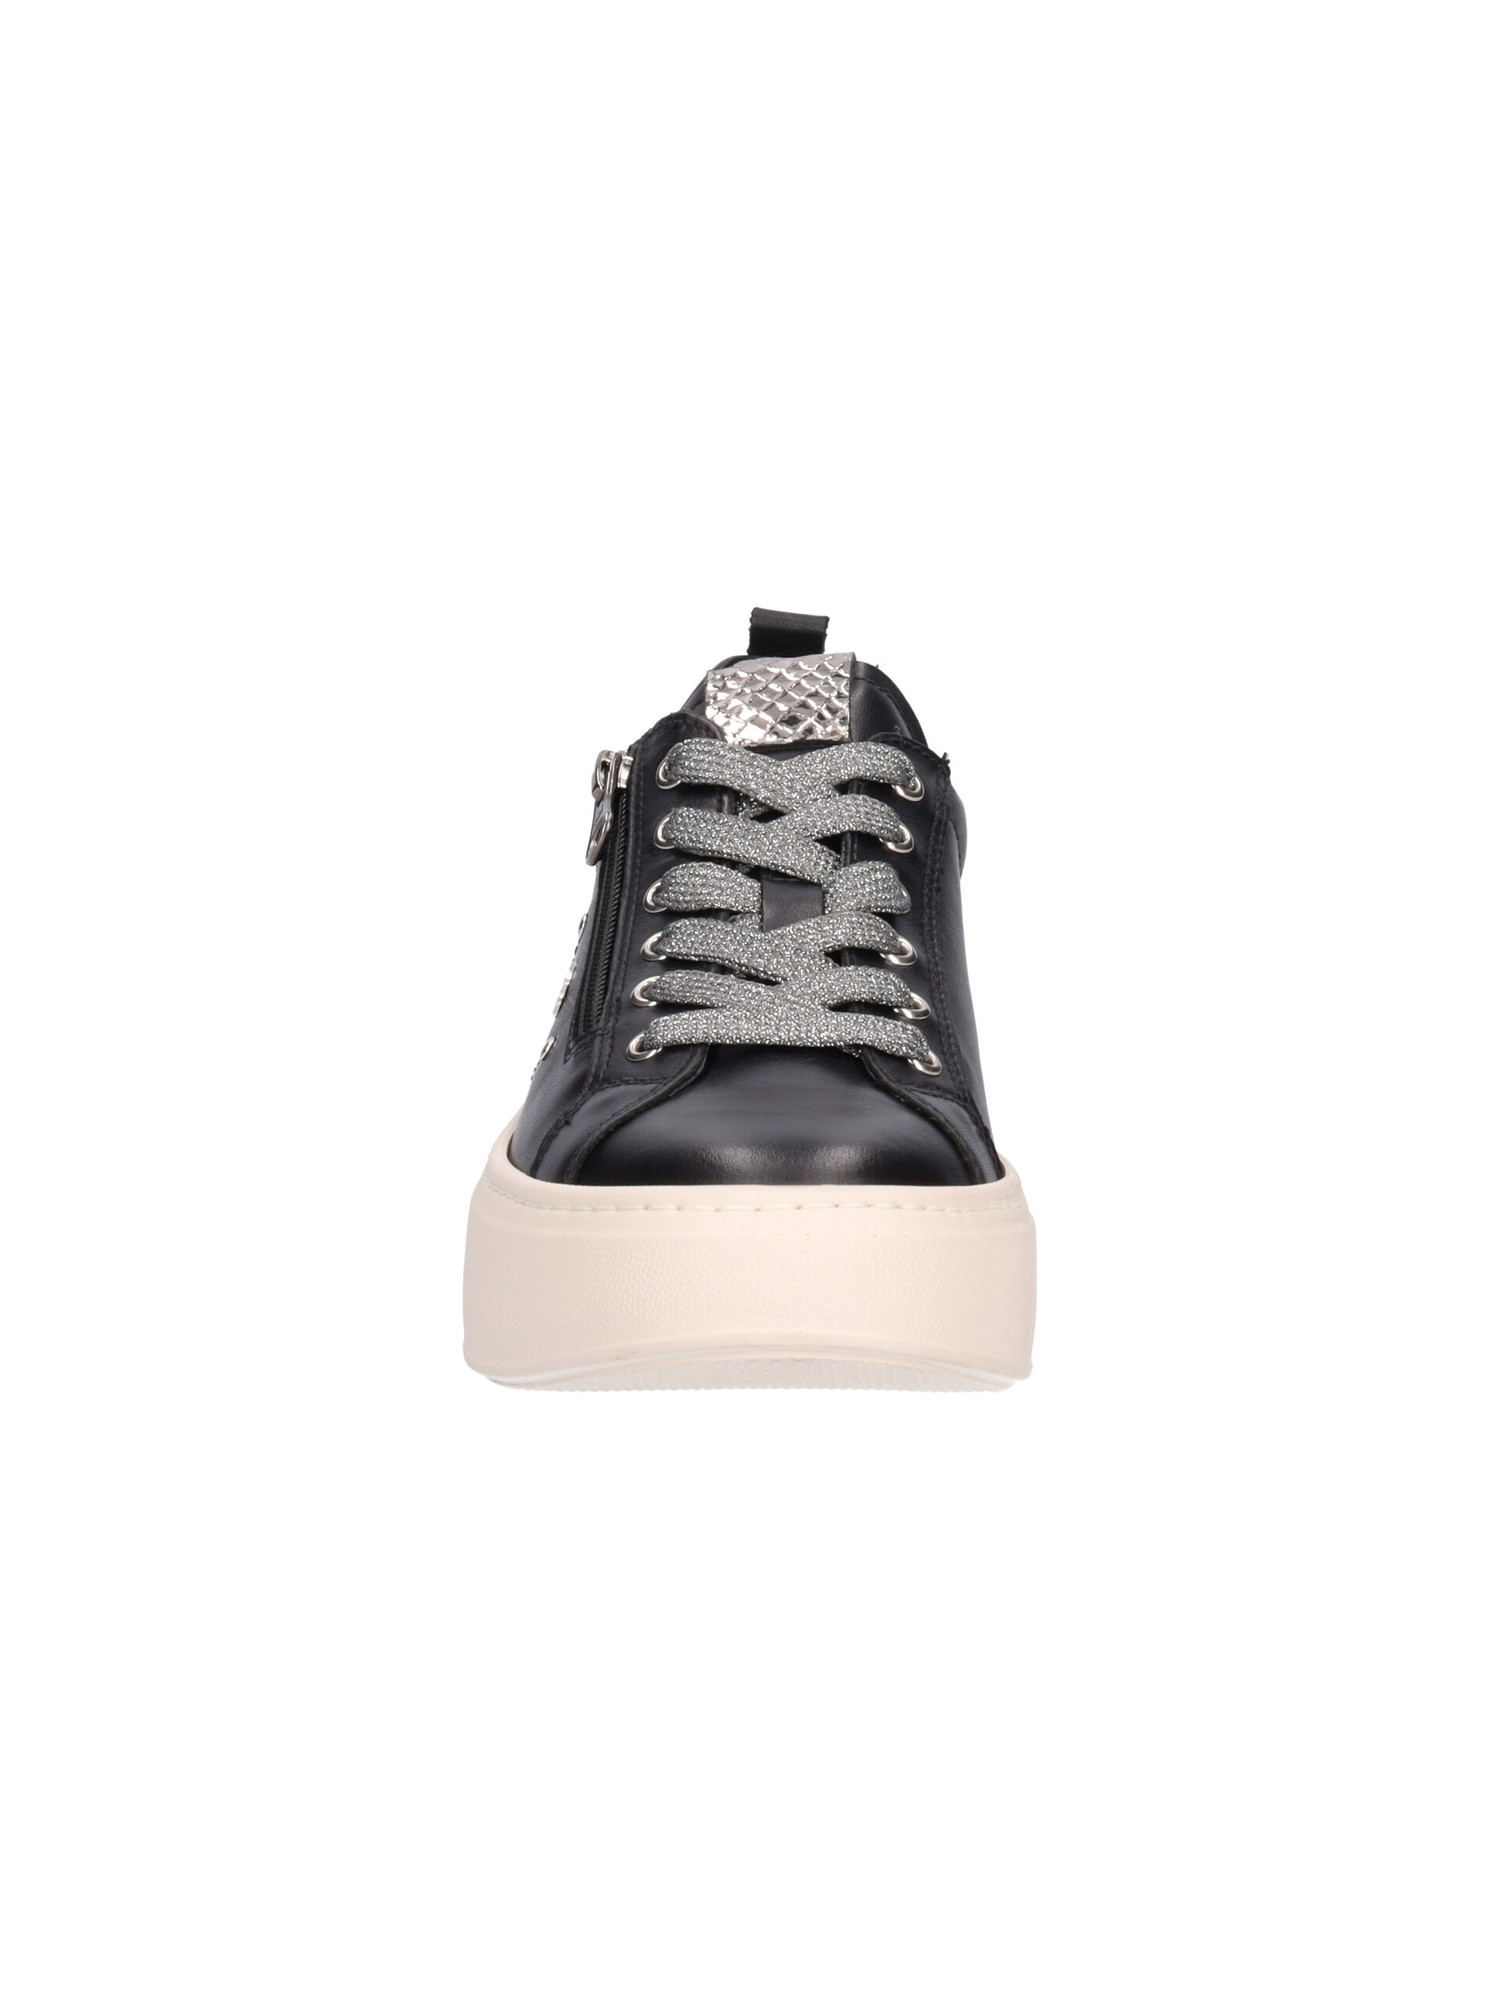 sneaker-platform-nero-giardini-da-donna-nera-4cc060